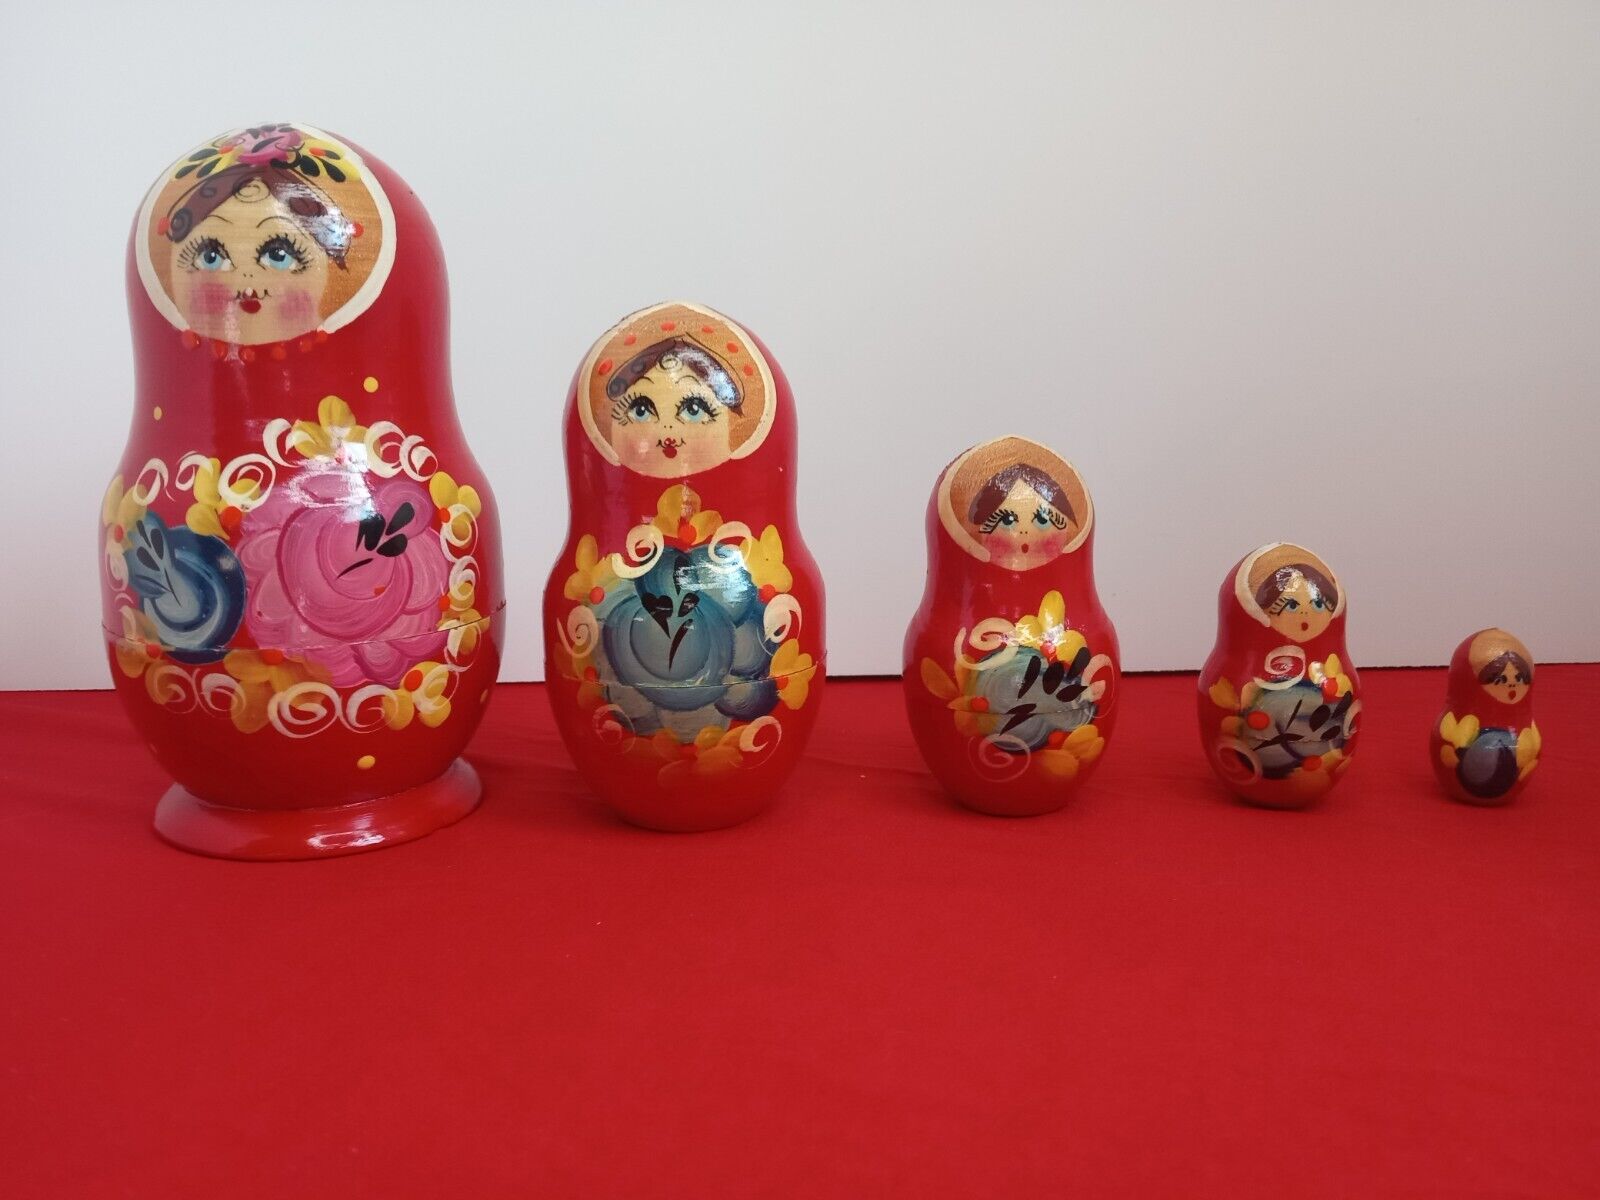 Matryoshka Russian Nesting Dolls 5 Pcs Handmade Wood Made in Russia